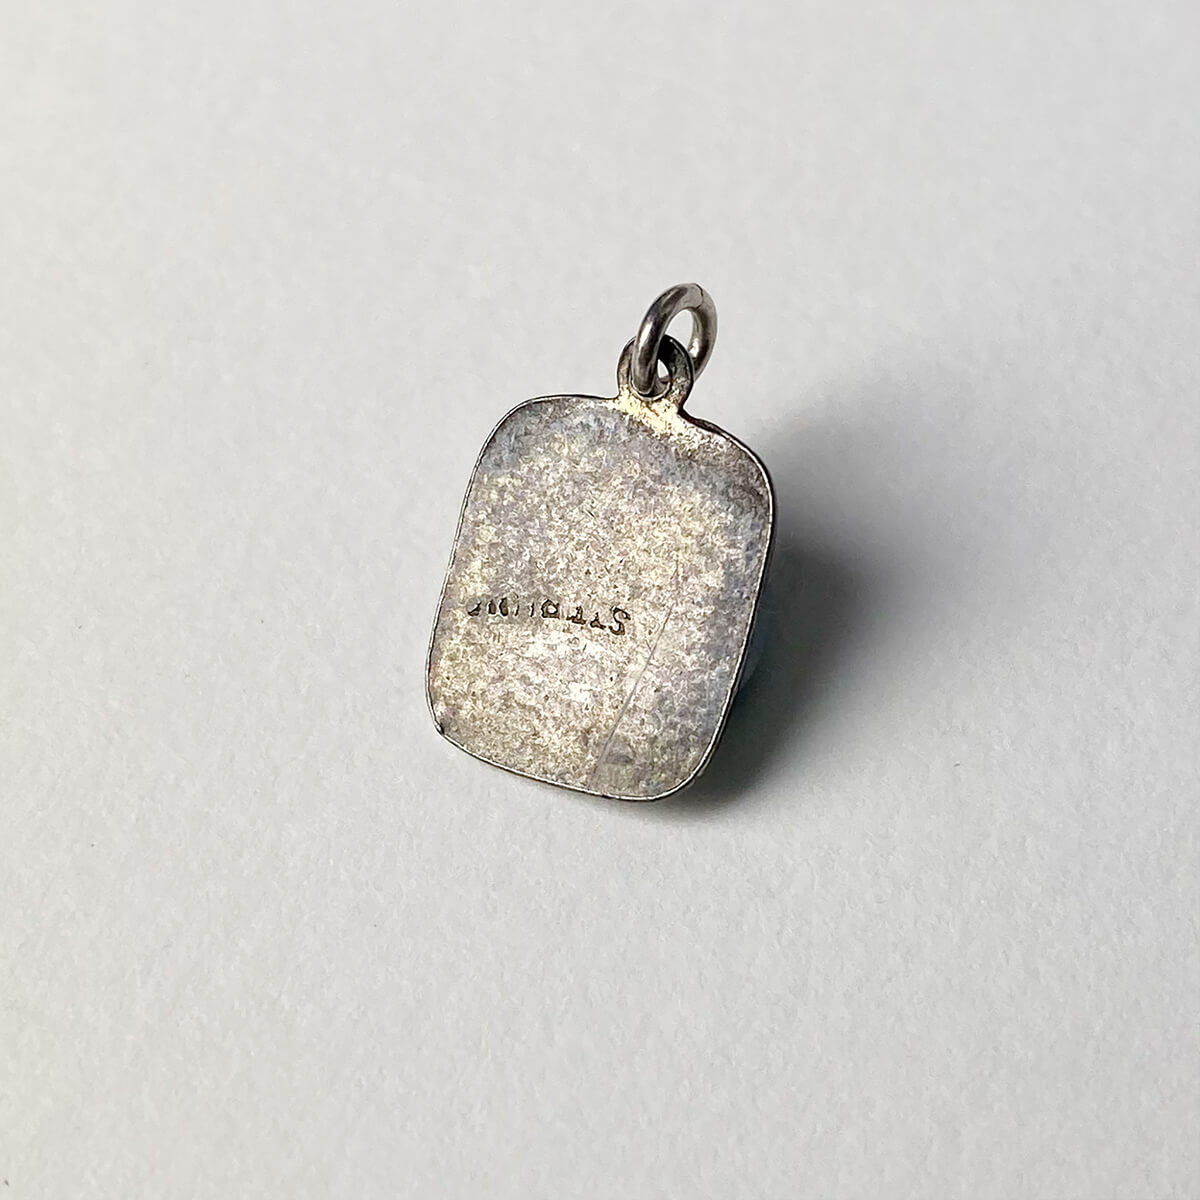 FMN flower charm sterling silver and guilloche enamel pendant